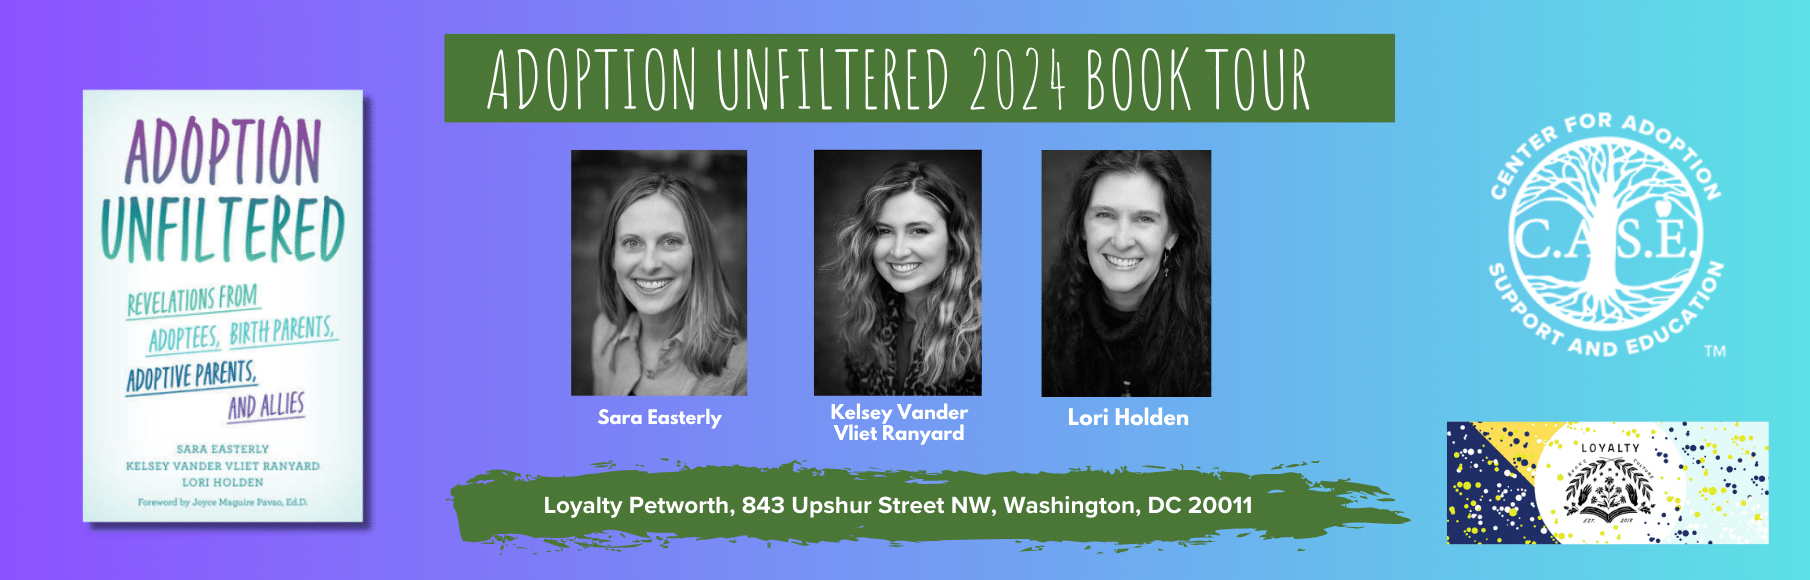 Sara Easterly, Kelsey Vander Vilet Ranyard, and Lori Holden, authors of Adoption Unfiltered